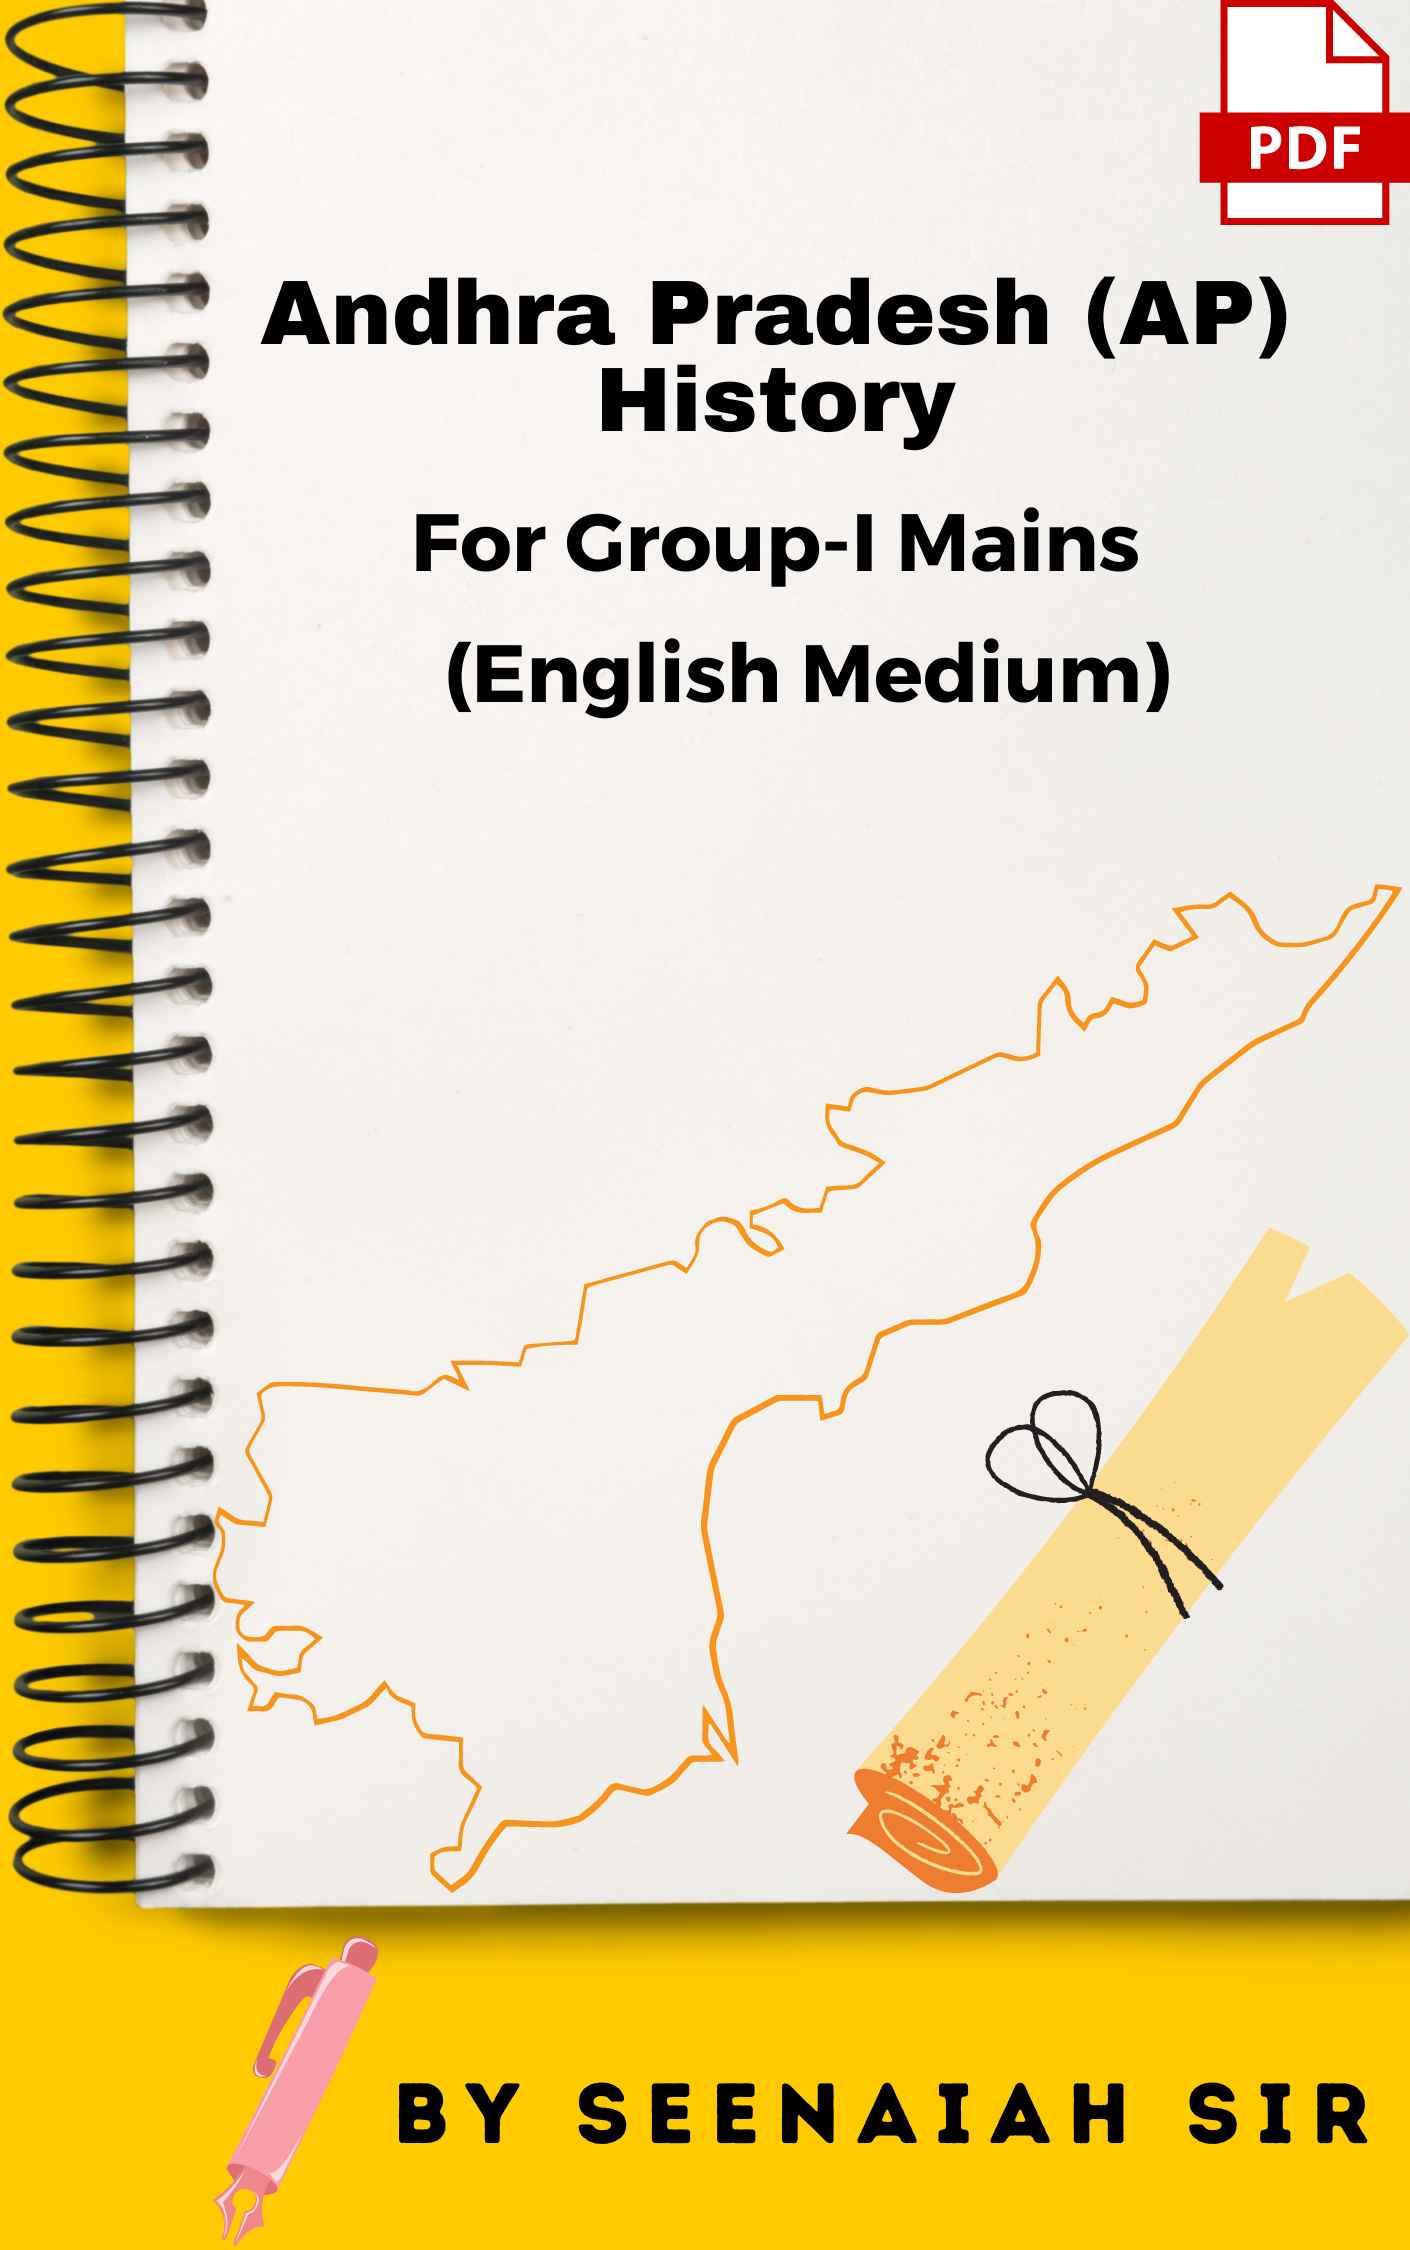 Andhra Pradesh (AP) History for Group-I Mains (Hand Written Class Notes English Medium)